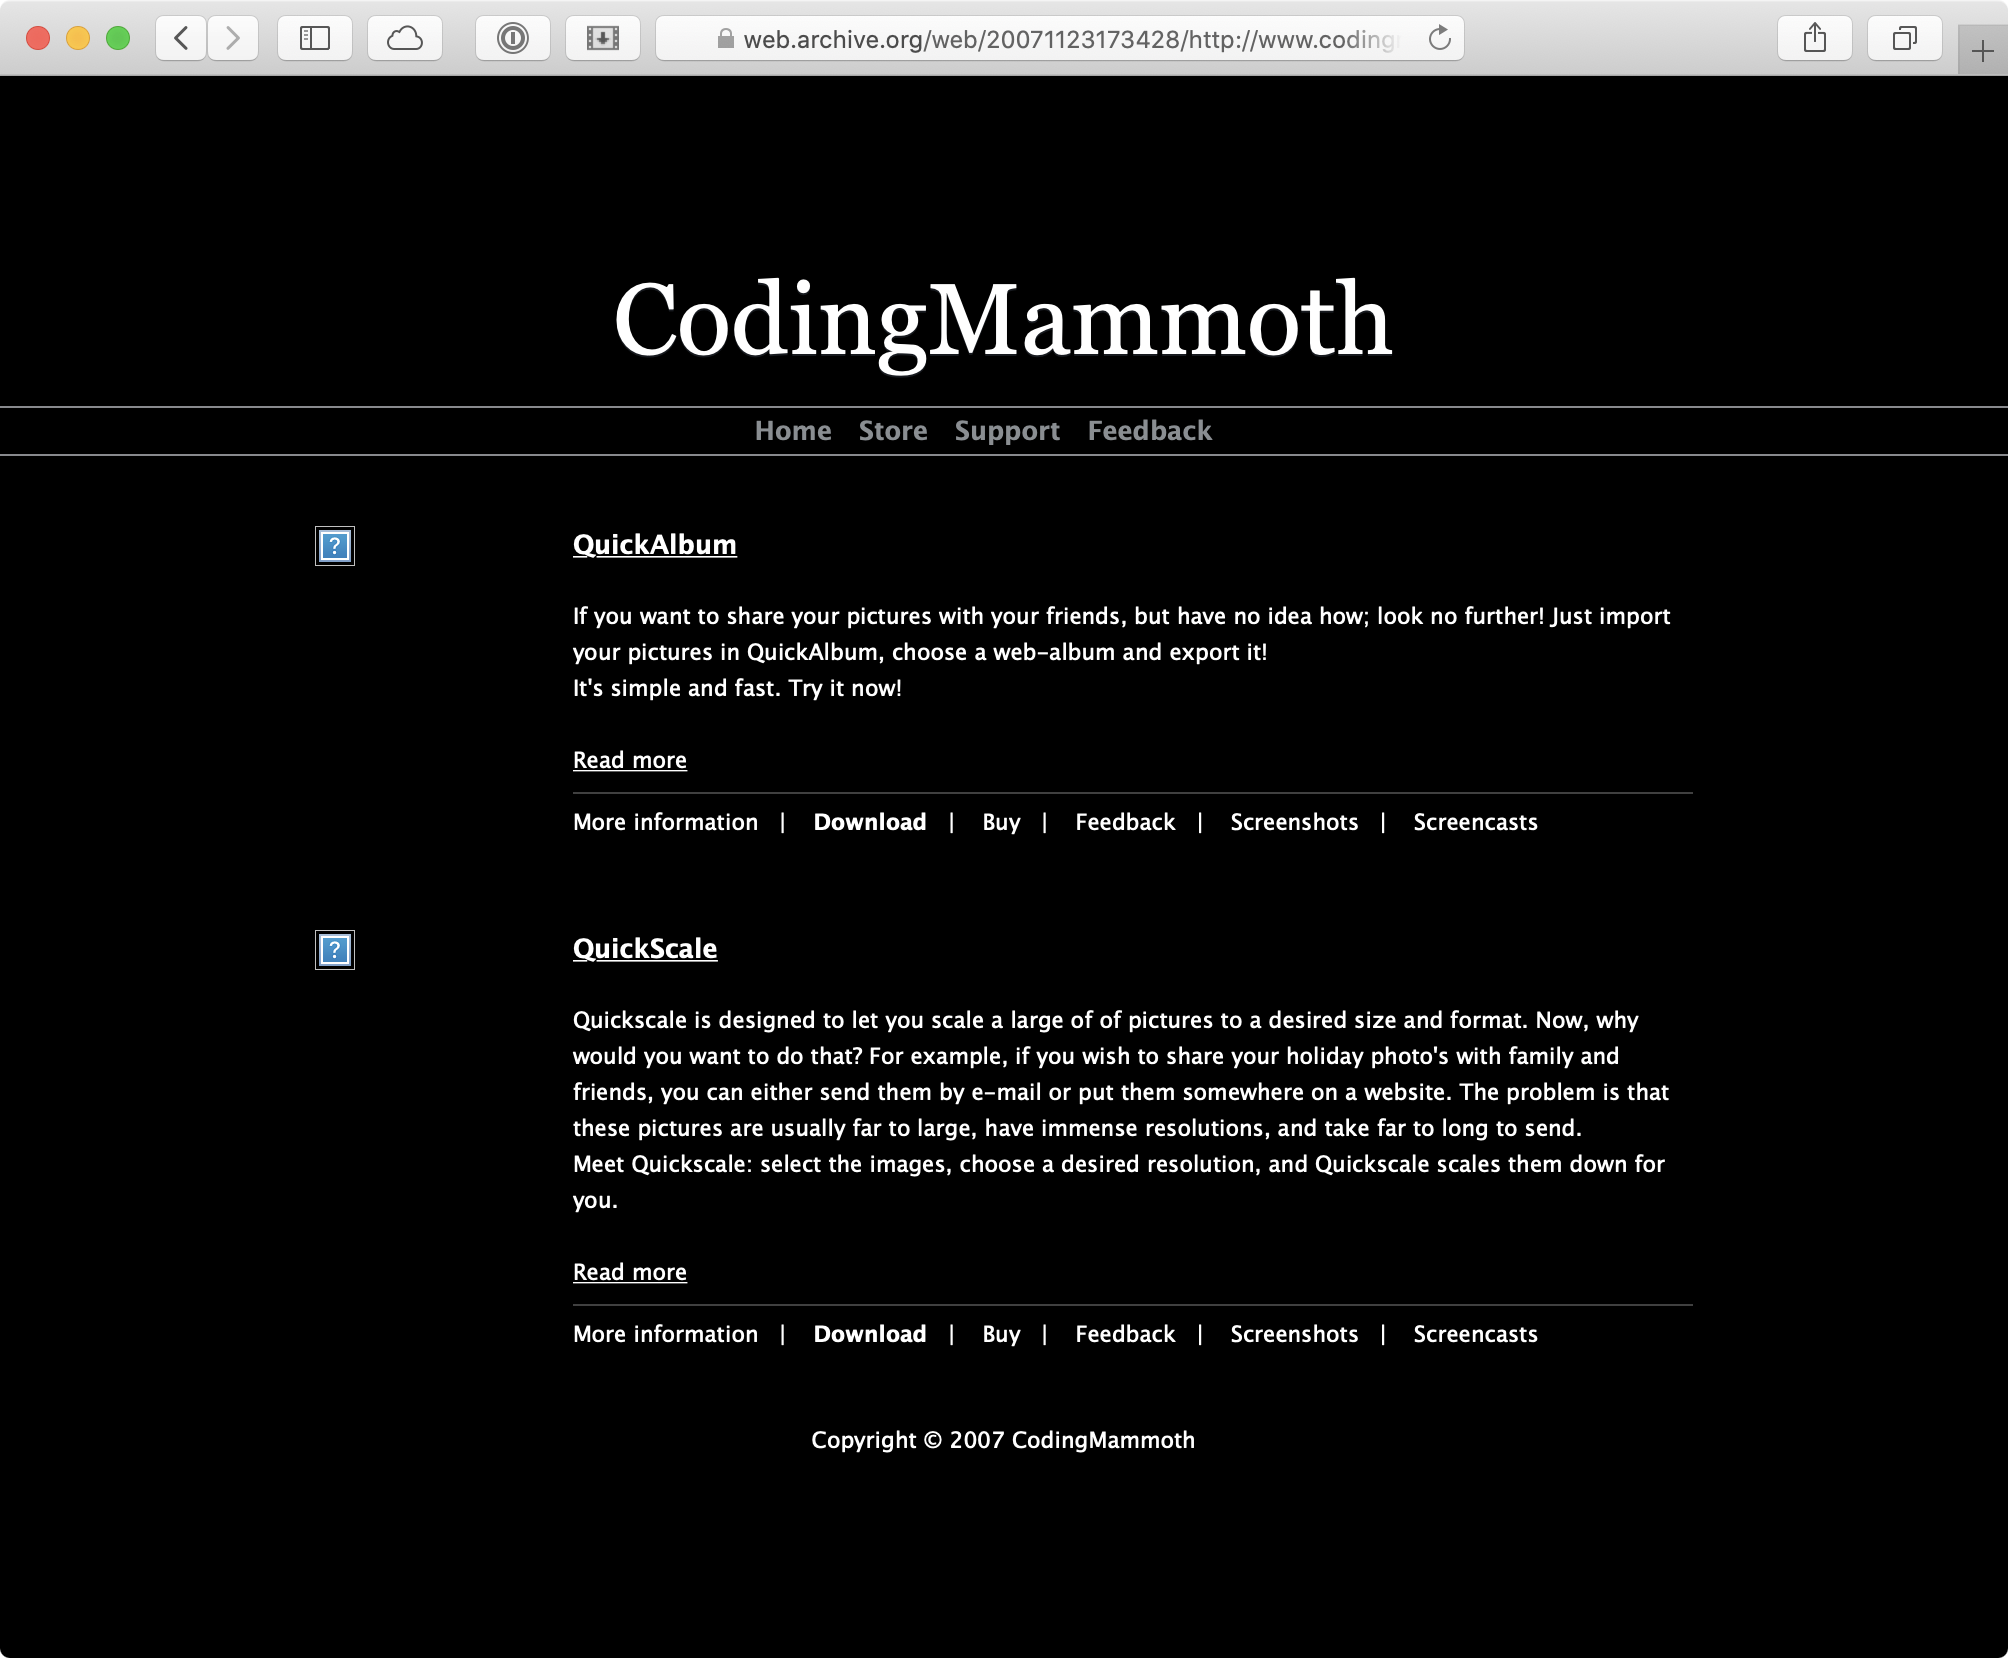 Website Coding Mammoth 2007